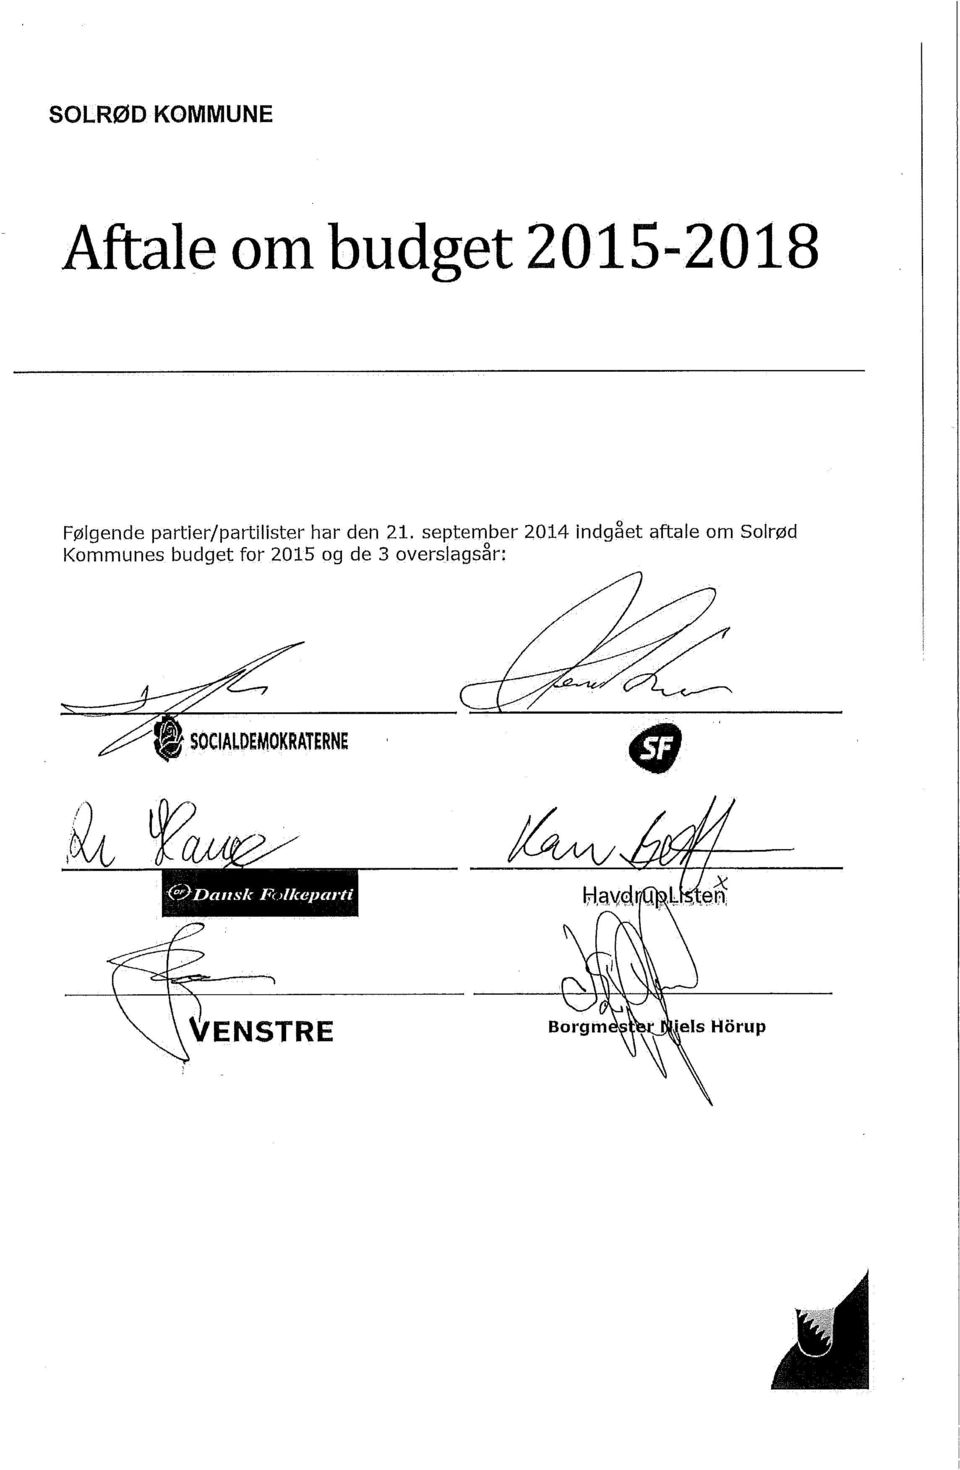 September 2014 indgaet aftale om Solr0d Kommunes